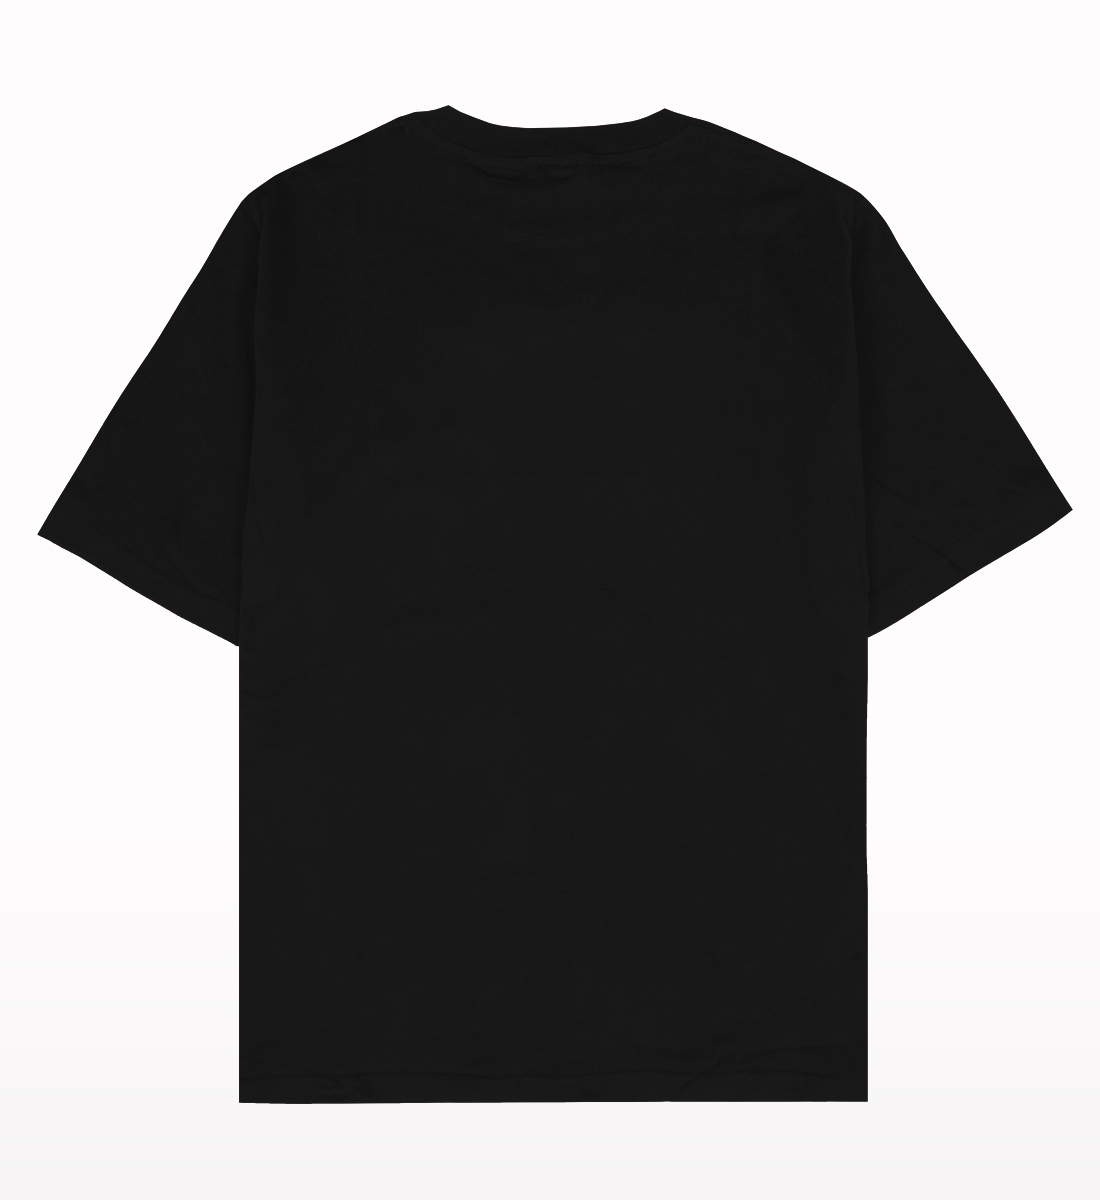 Oversized Drop Shoulder Black Plain T-shirt - Crunkthread.com